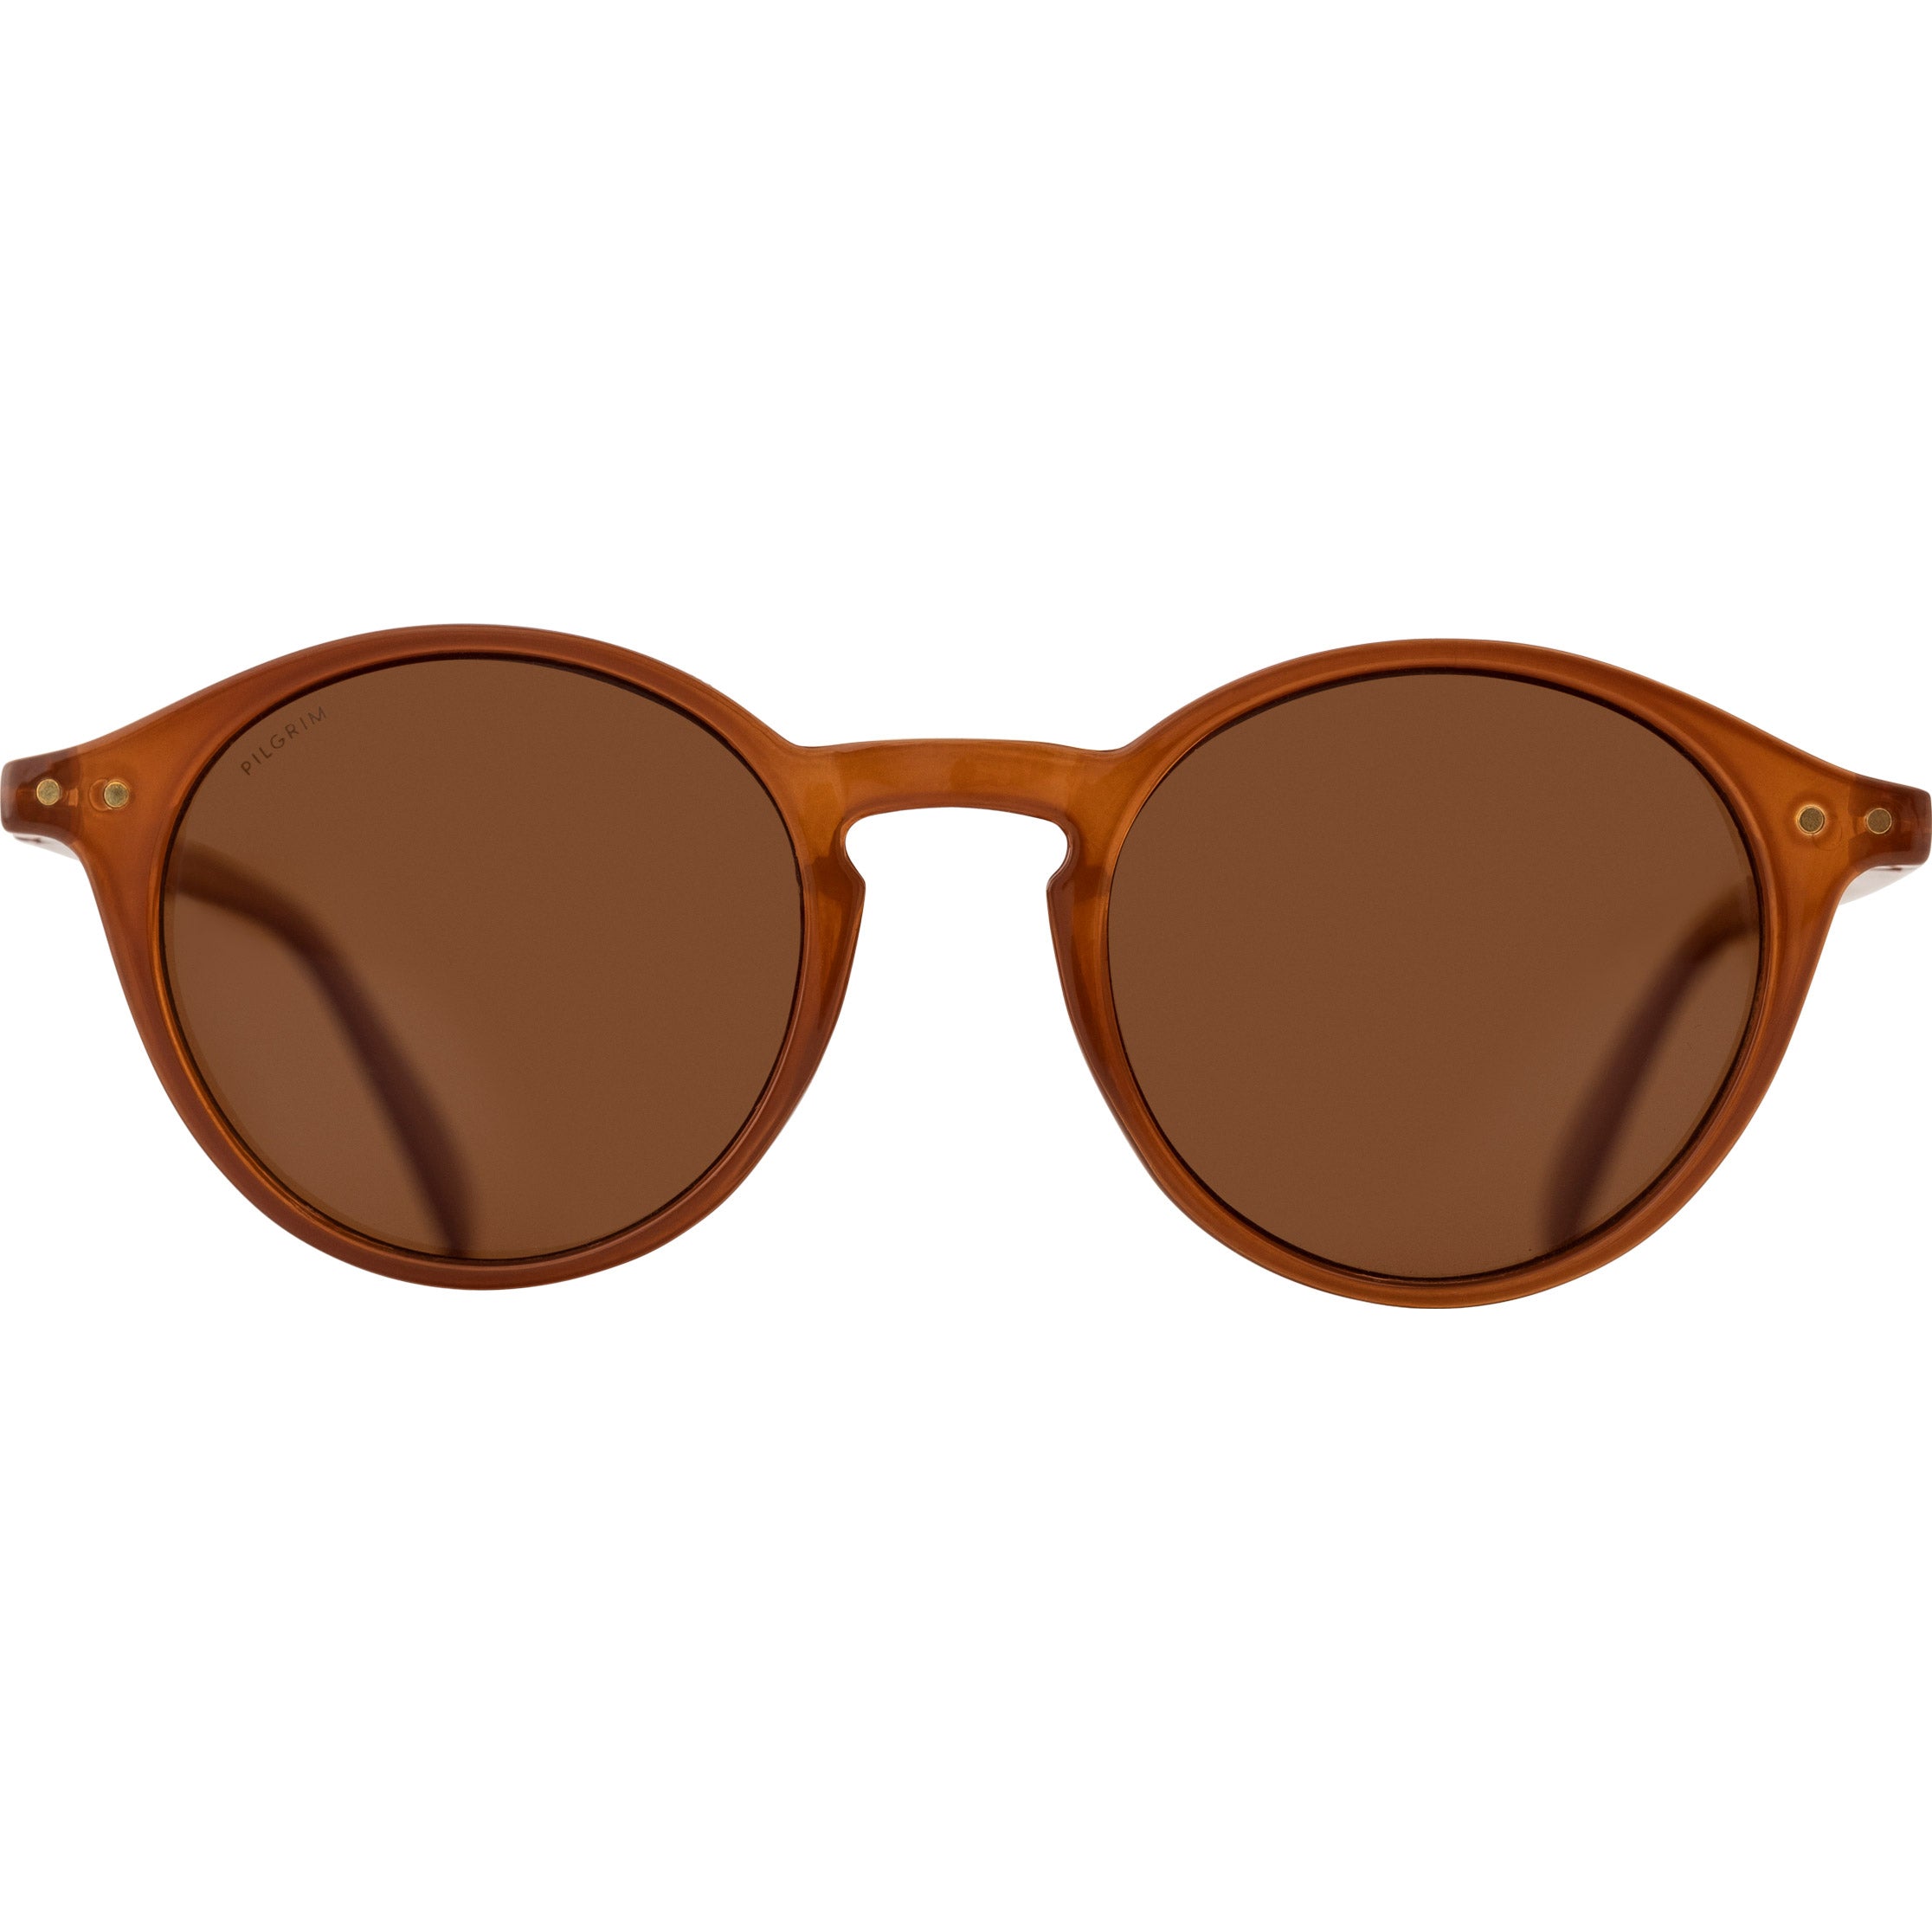 ROXANNE classic round shaped sunglasses, brown – Pilgrim